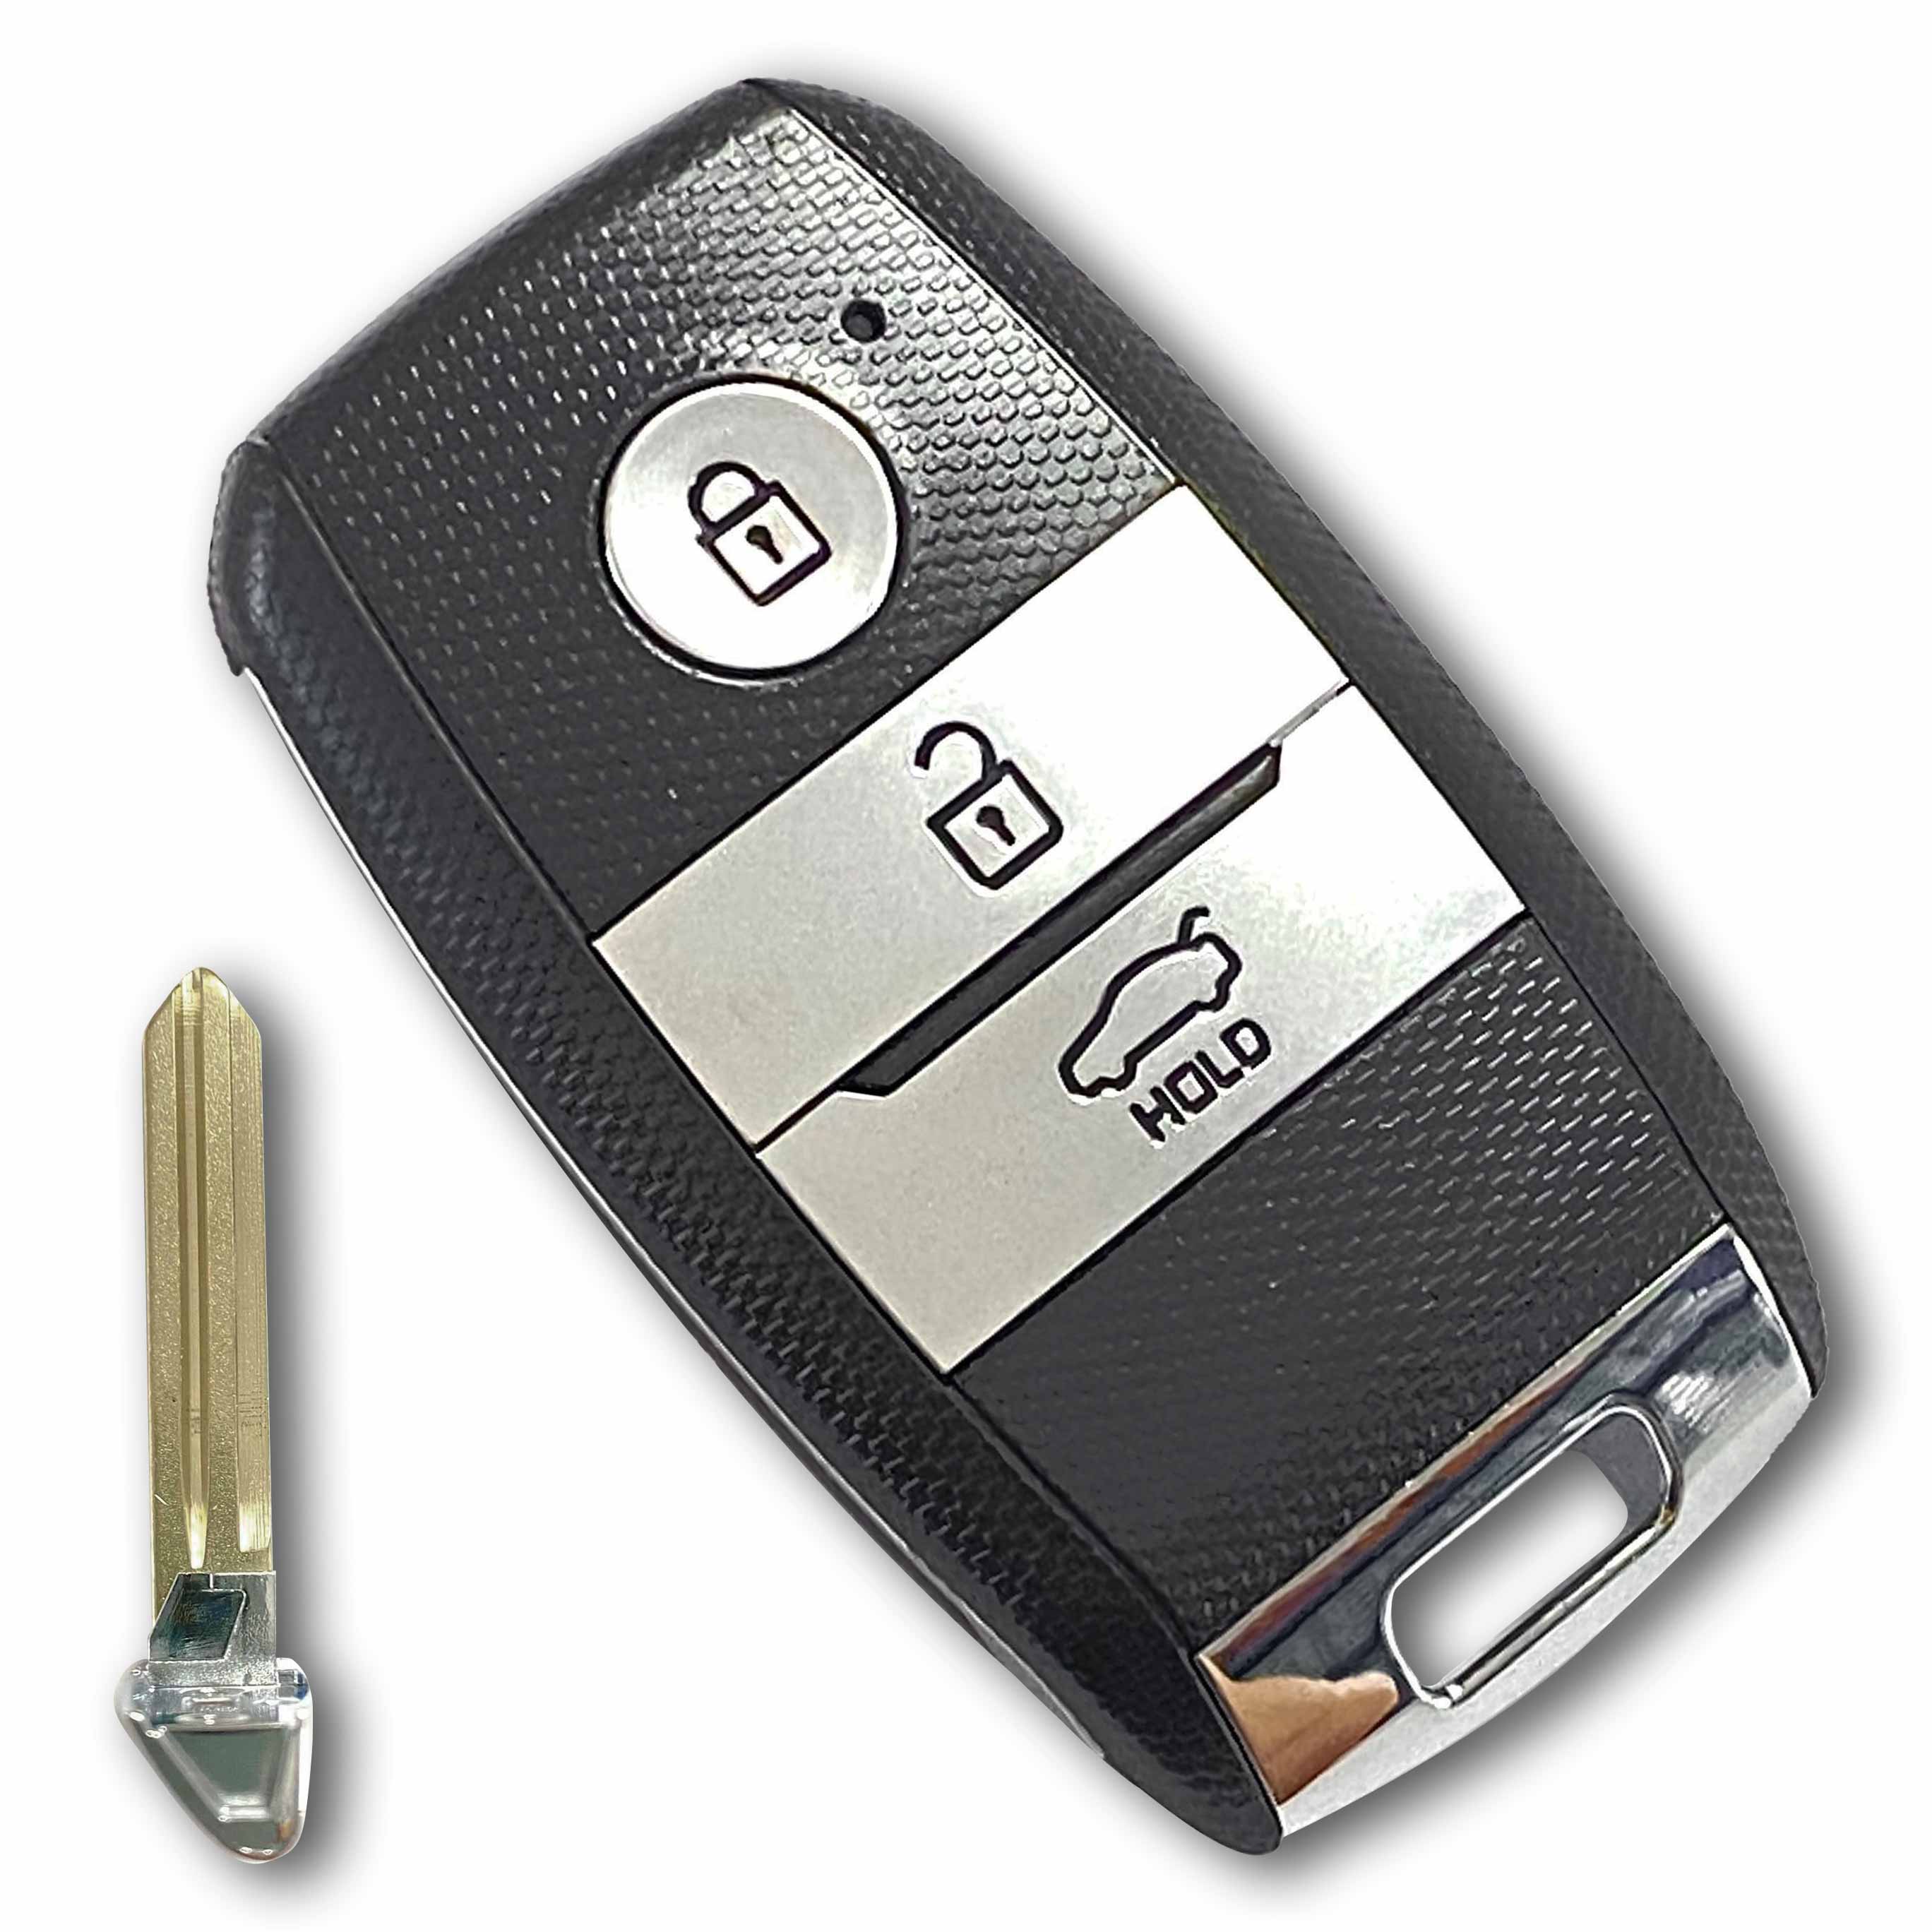 433 Smart Key for 2014 -17 K3 Certao Fort / 95440-B5000 A7100 / 8A Chip